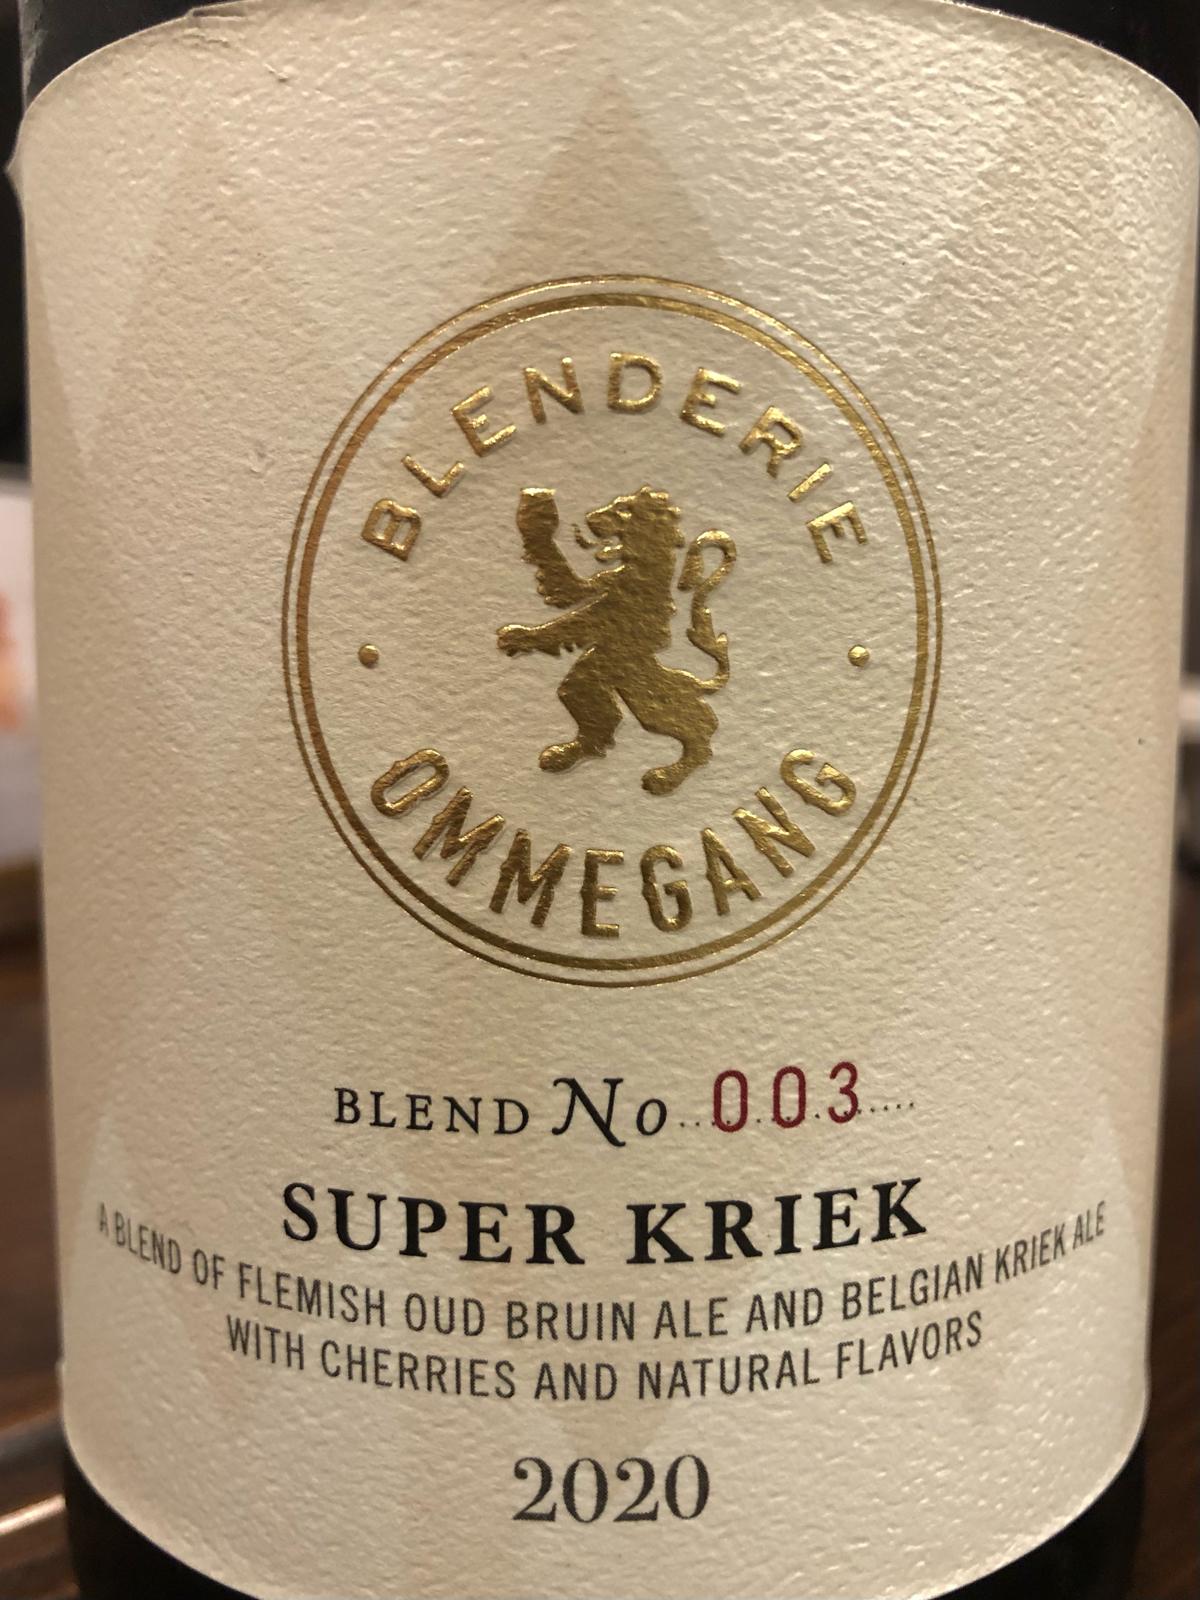 Super Kriek Blend No. 003 (2020)